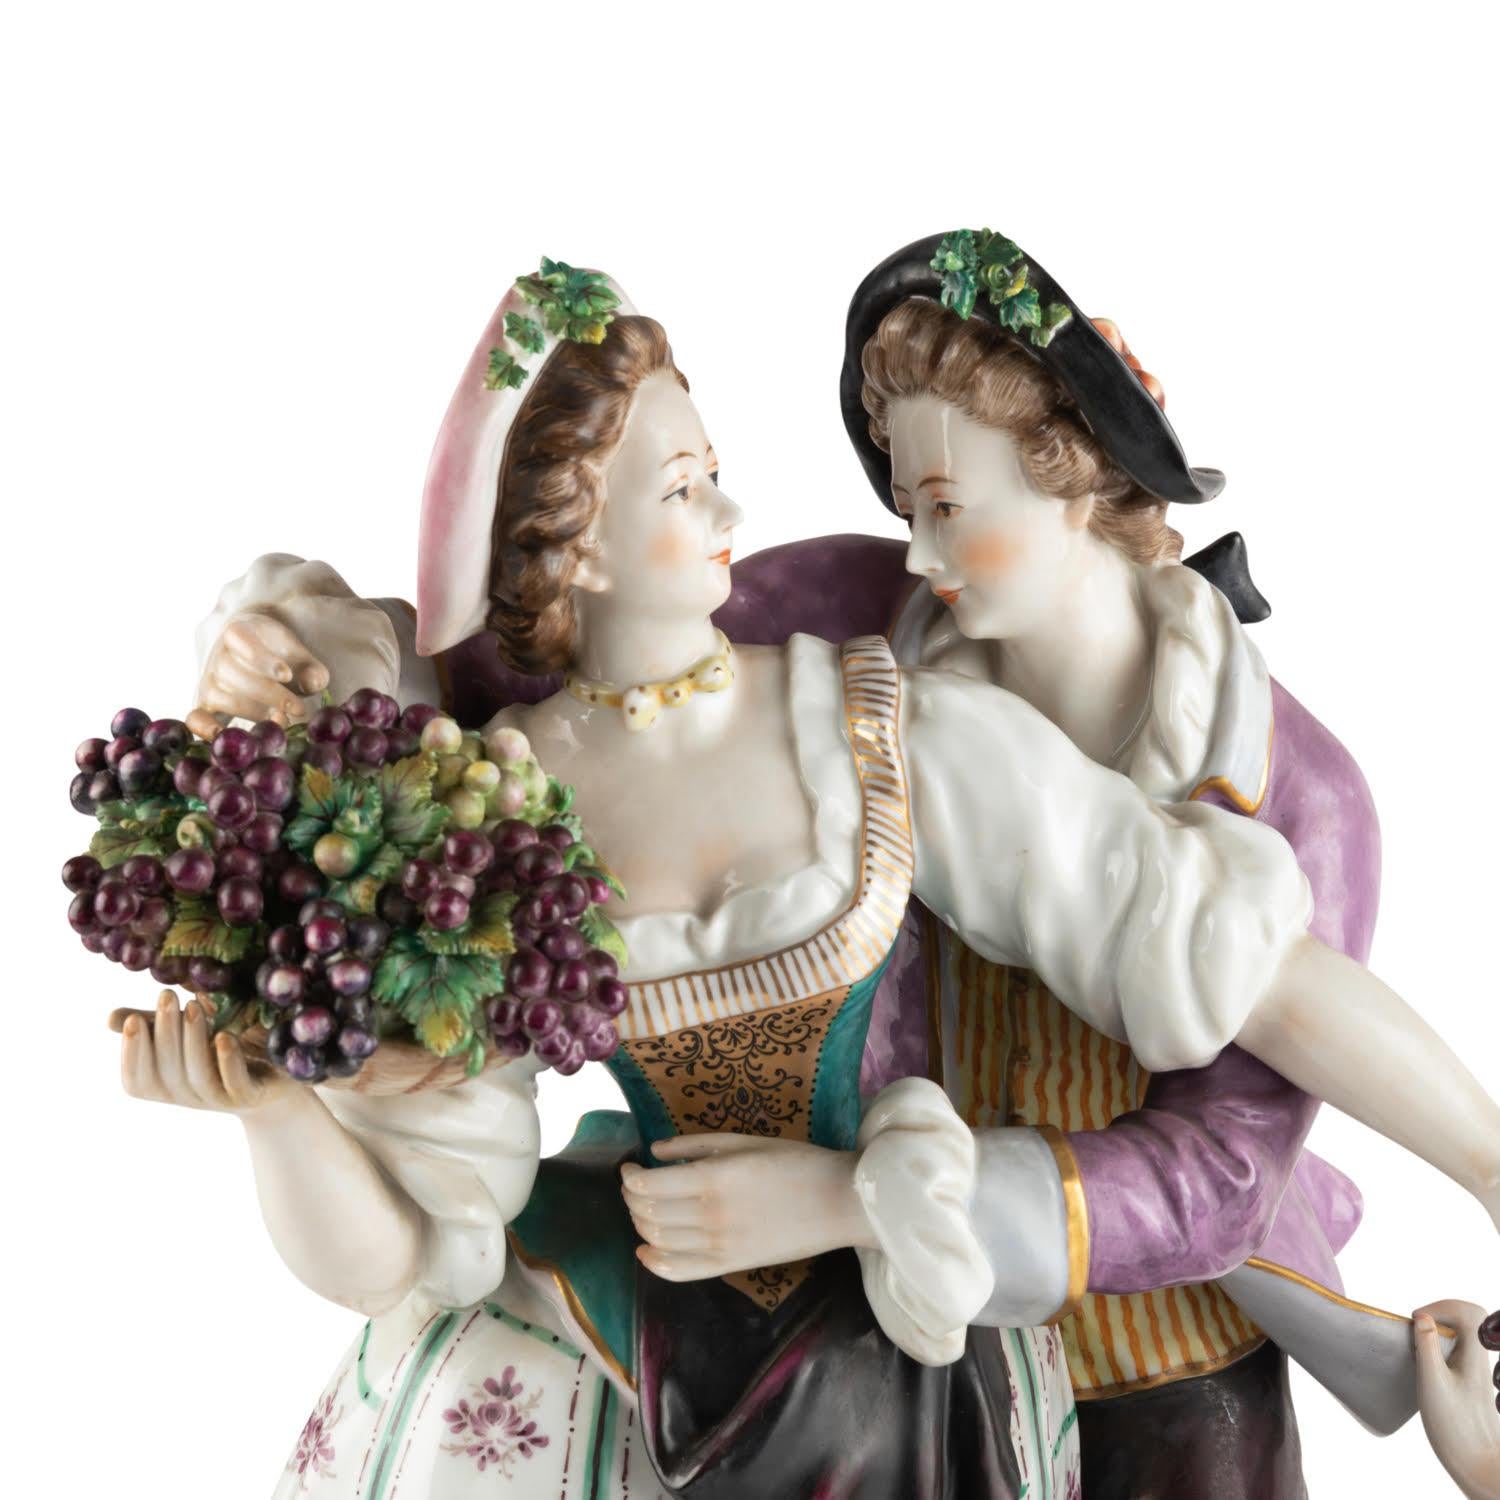 Porzellangruppe, Galant-Szene, 19. Jahrhundert.

Porzellangruppe aus dem 19. Jahrhundert im Stil Louis XV, galante Szene.   
Fotos:(c)inu.studio_art 
H: 41cm , B: 37cm, T: 24cm